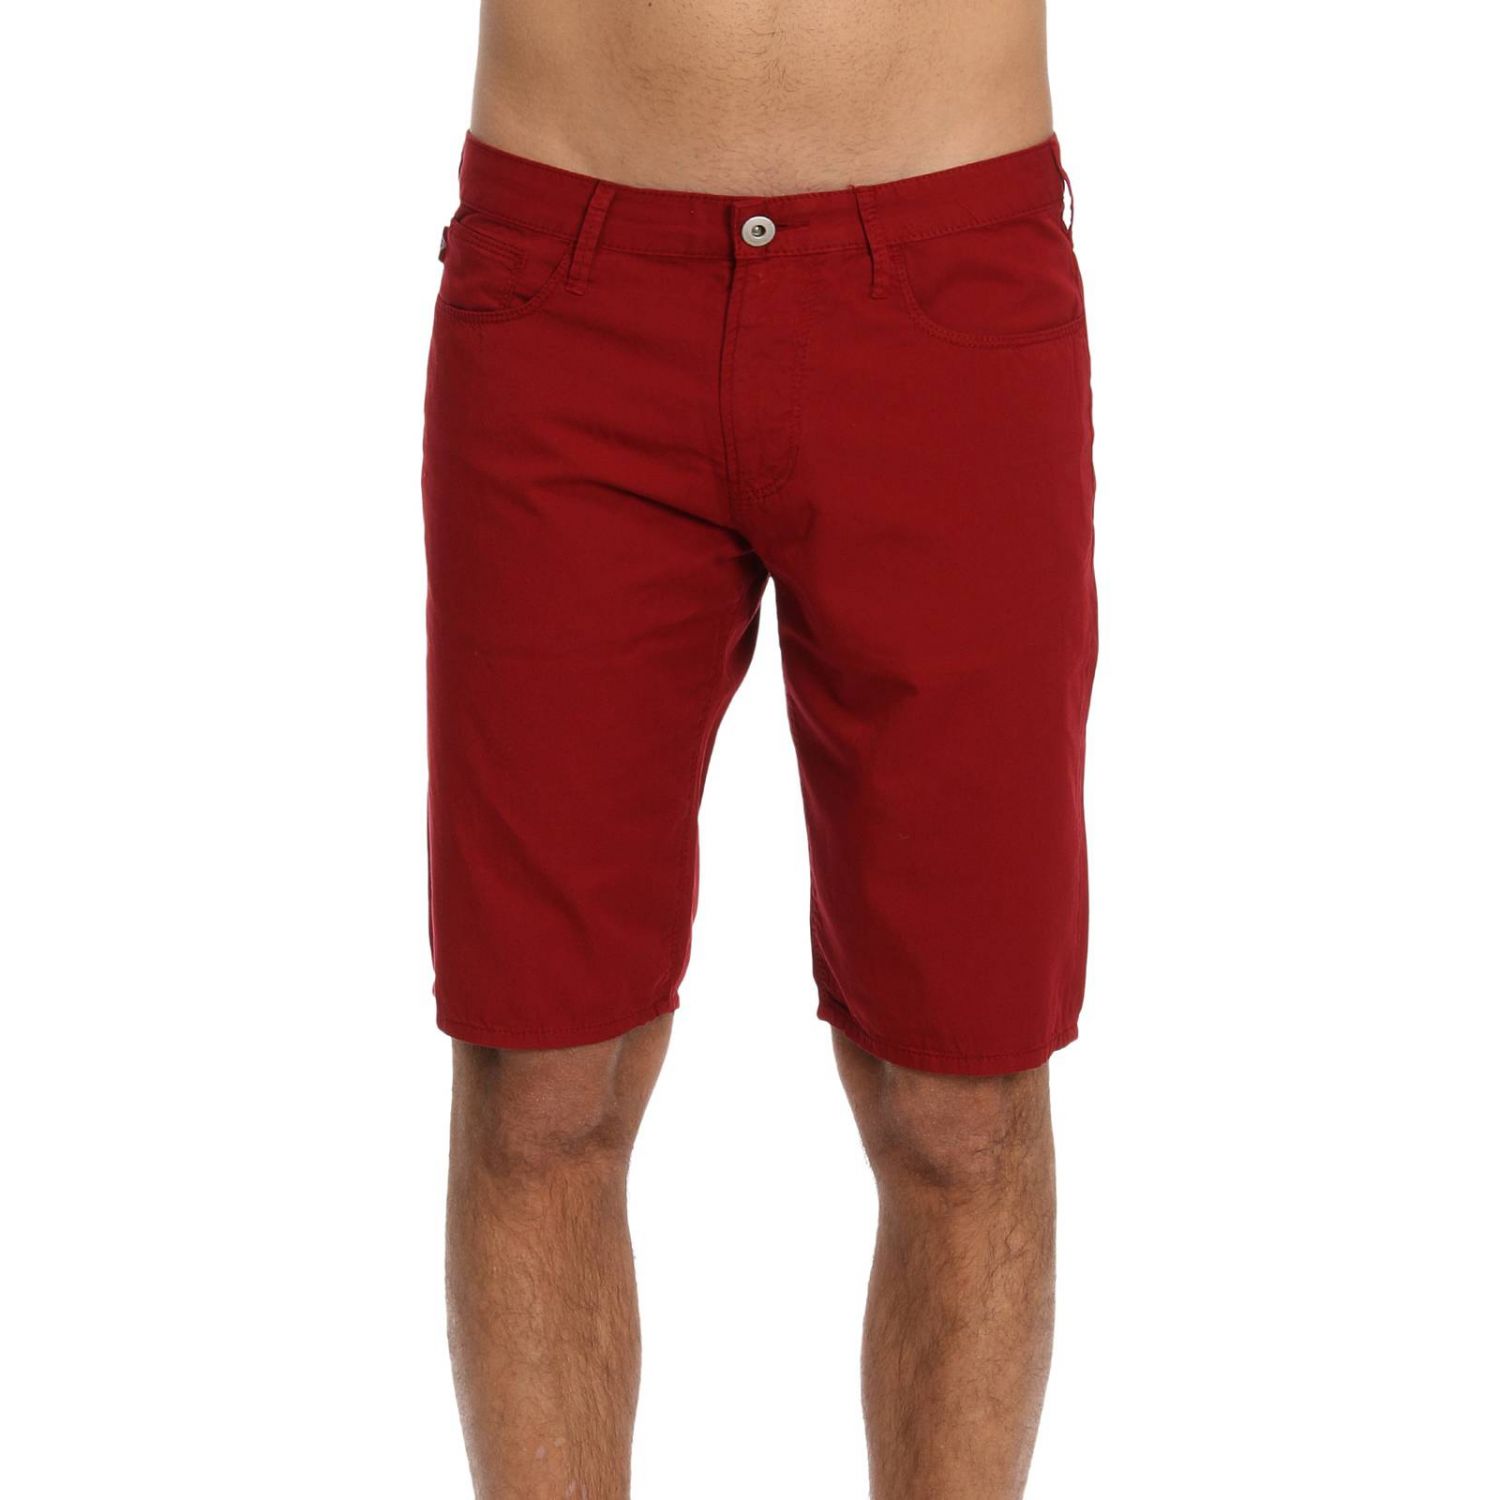 Emporio Armani Outlet: Pants men | Pants Emporio Armani Men Red | Pants ...